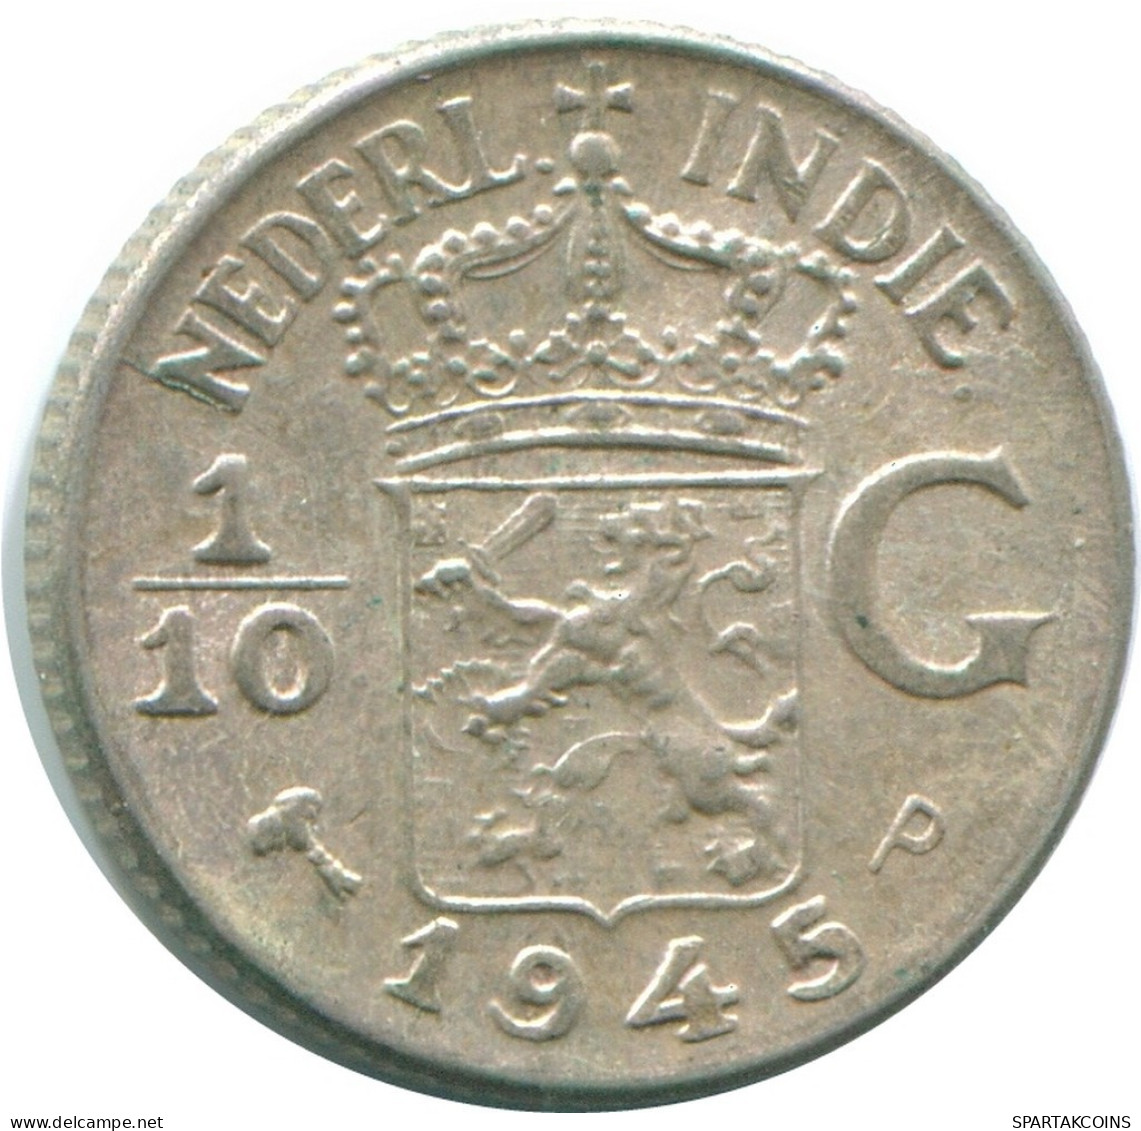 1/10 GULDEN 1945 P INDIAS ORIENTALES DE LOS PAÍSES BAJOS PLATA #NL14153.3.E.A - Dutch East Indies